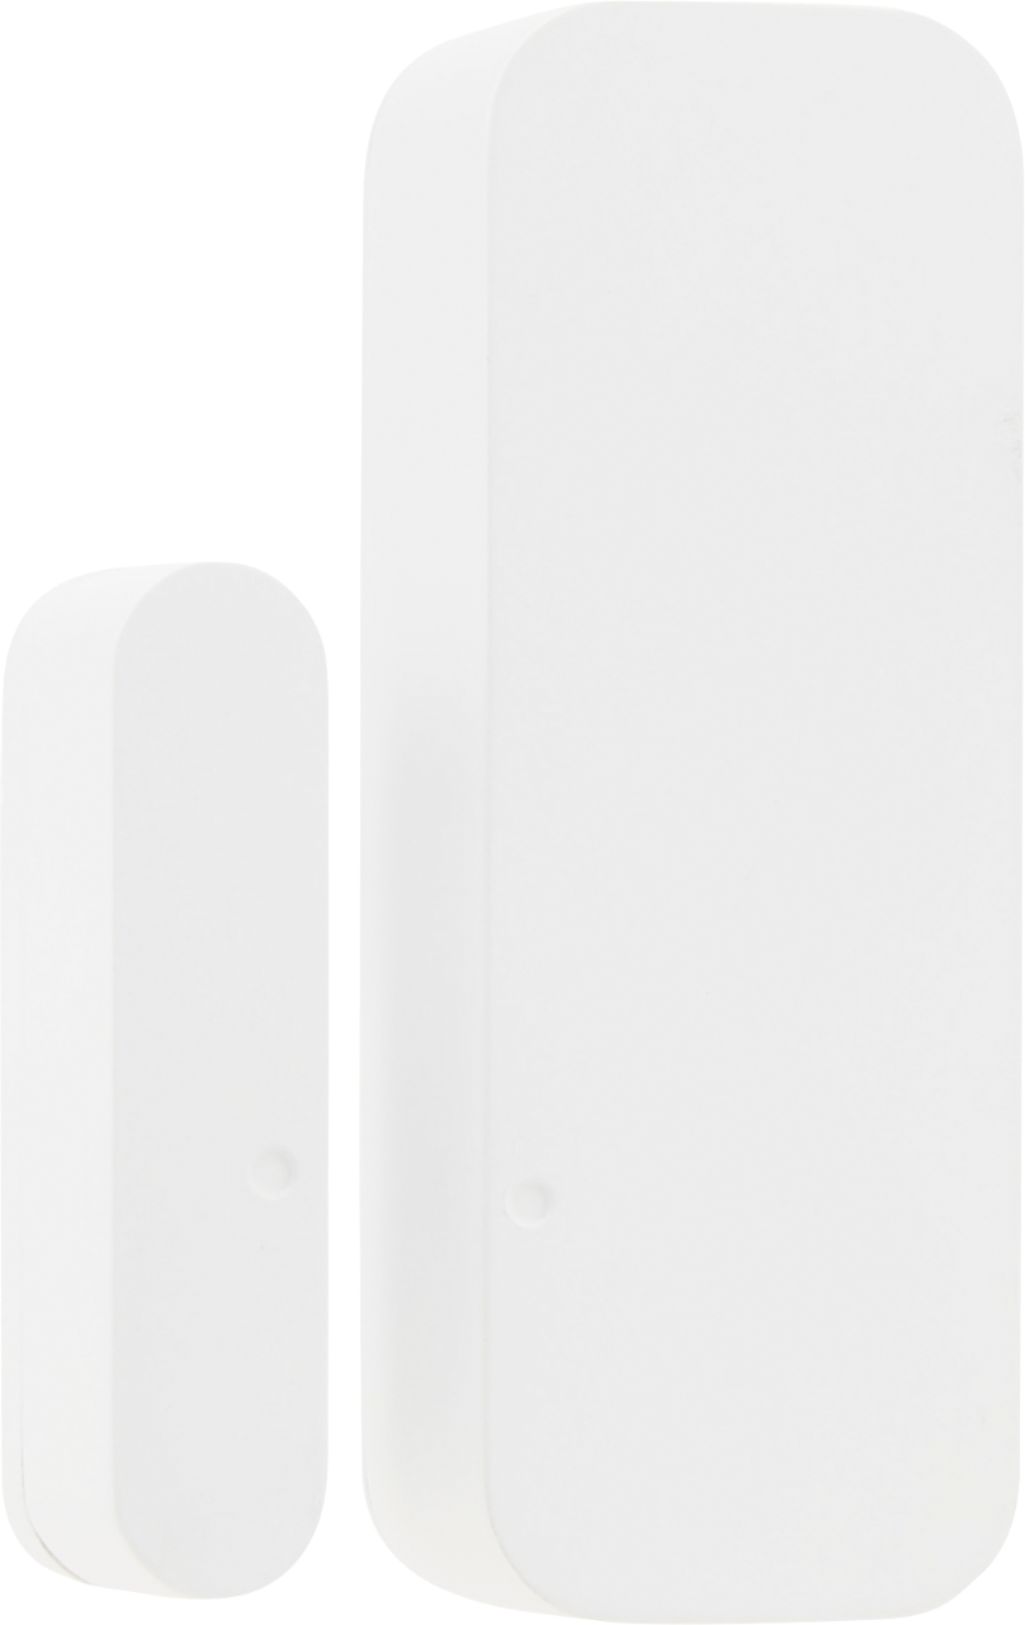 Angle View: ecobee - SmartSensor 1-Pack - White